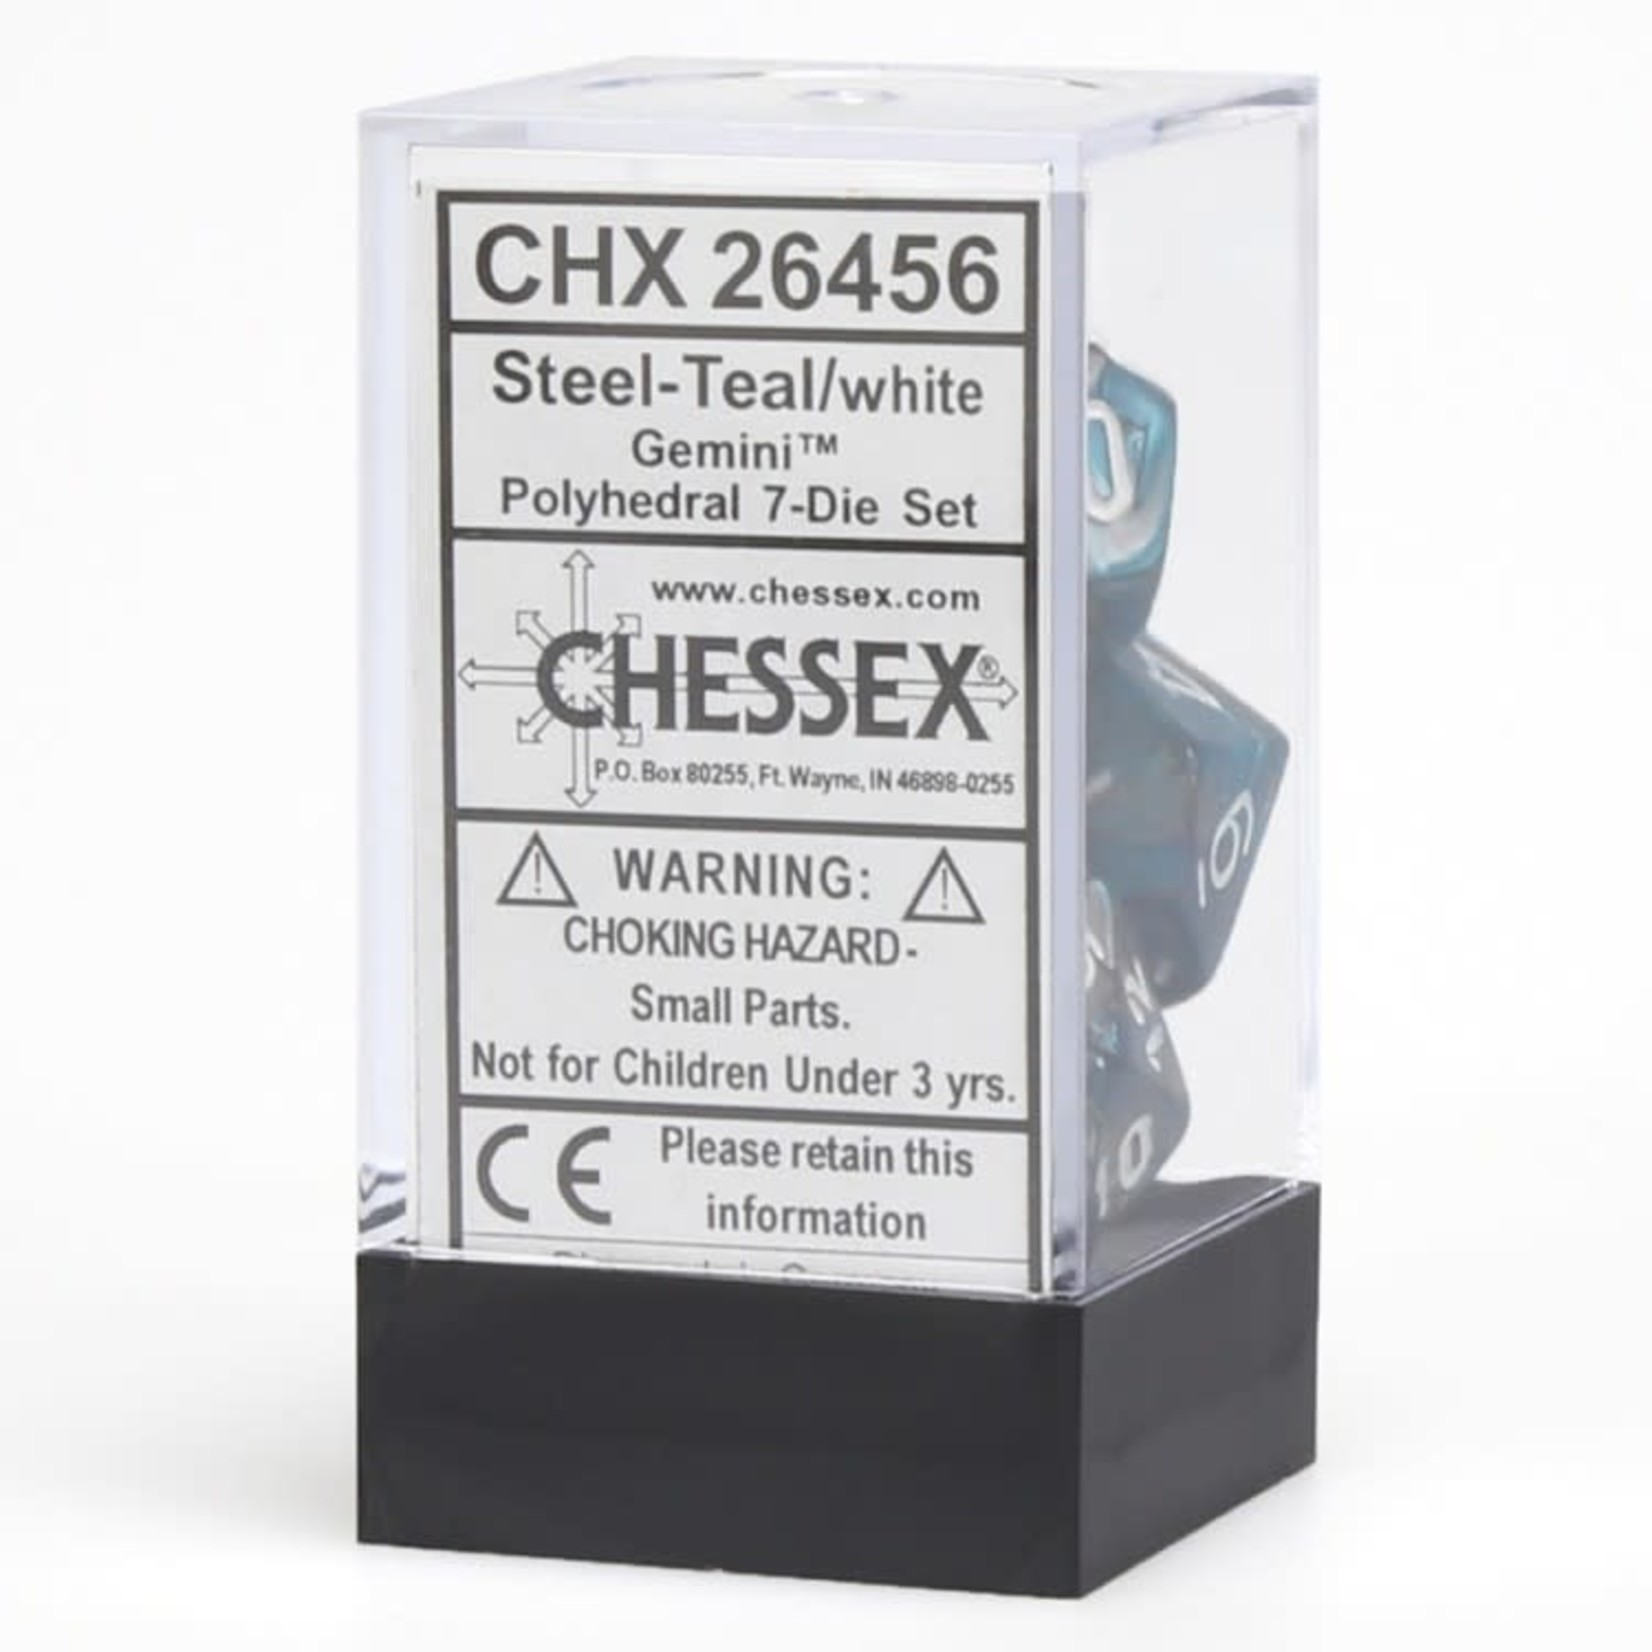 Chessex Gemini Steel-Teal/White